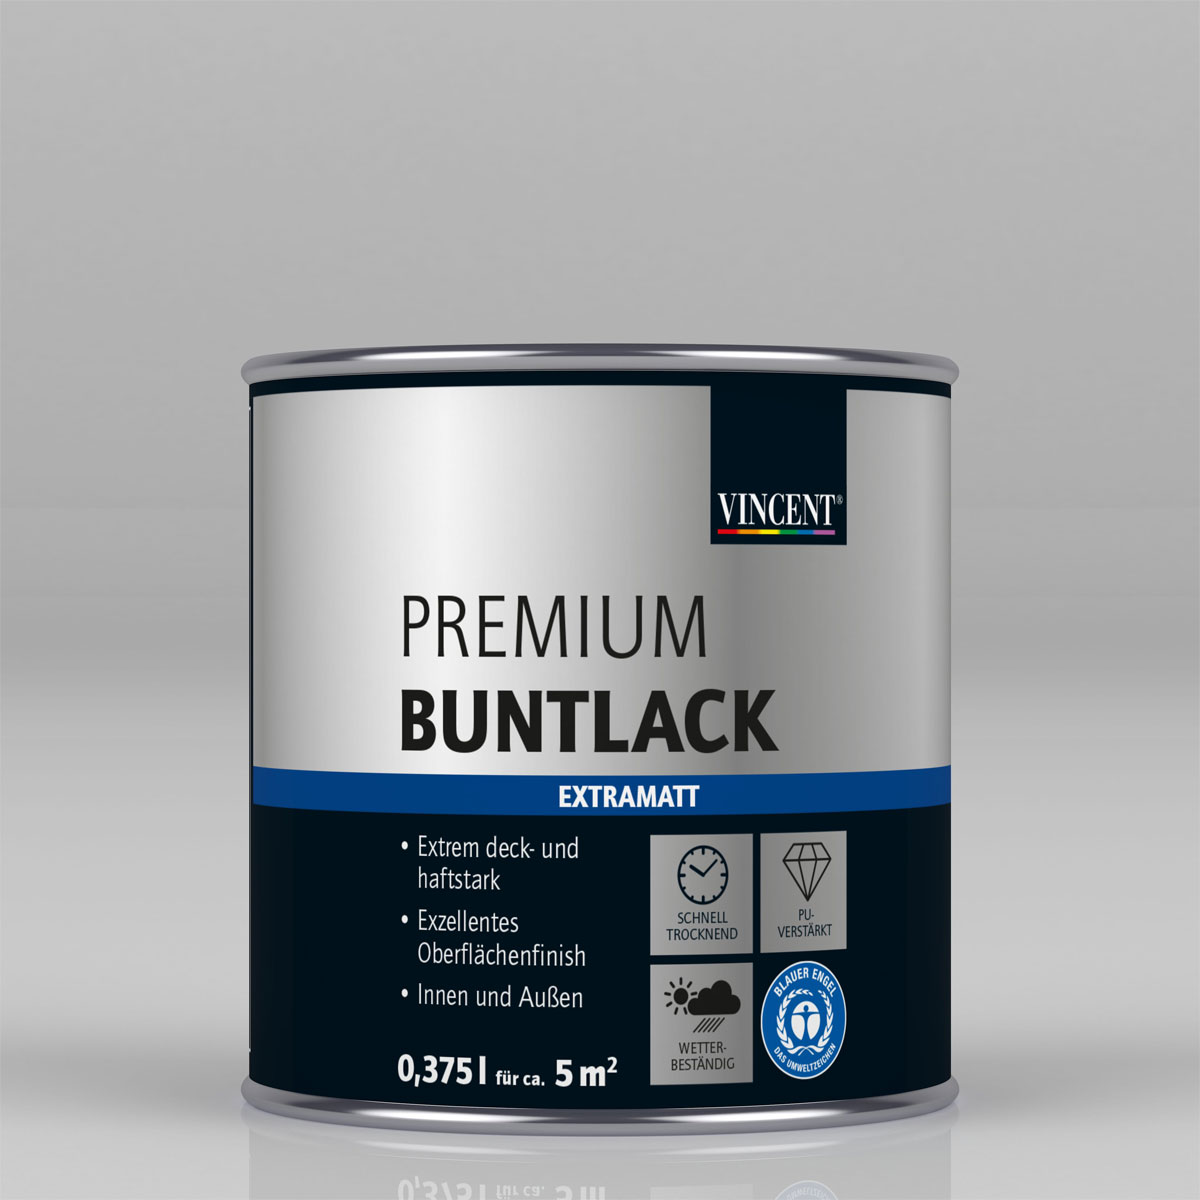 Premium Buntlack „grau metallic“ extramatt, 375 ml